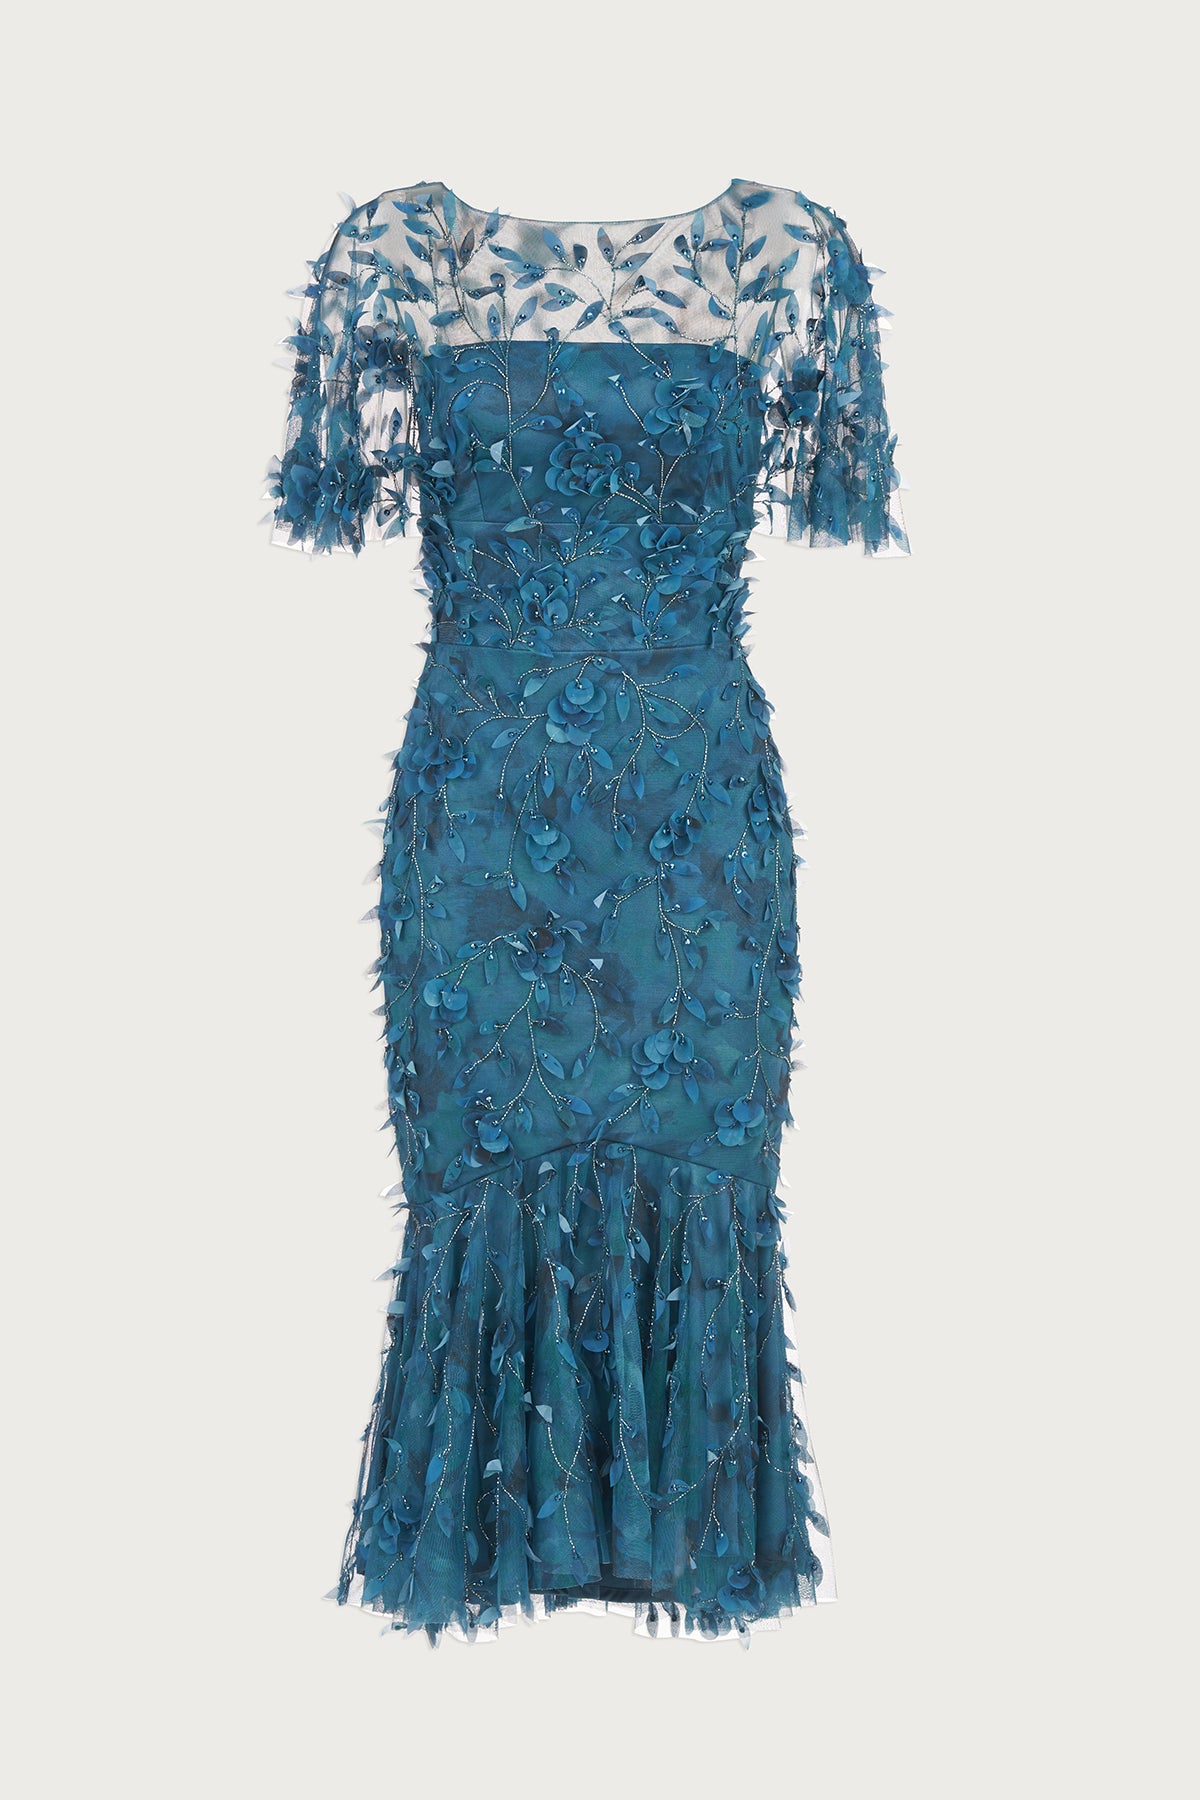 Sloane Petal Cocktail Dress